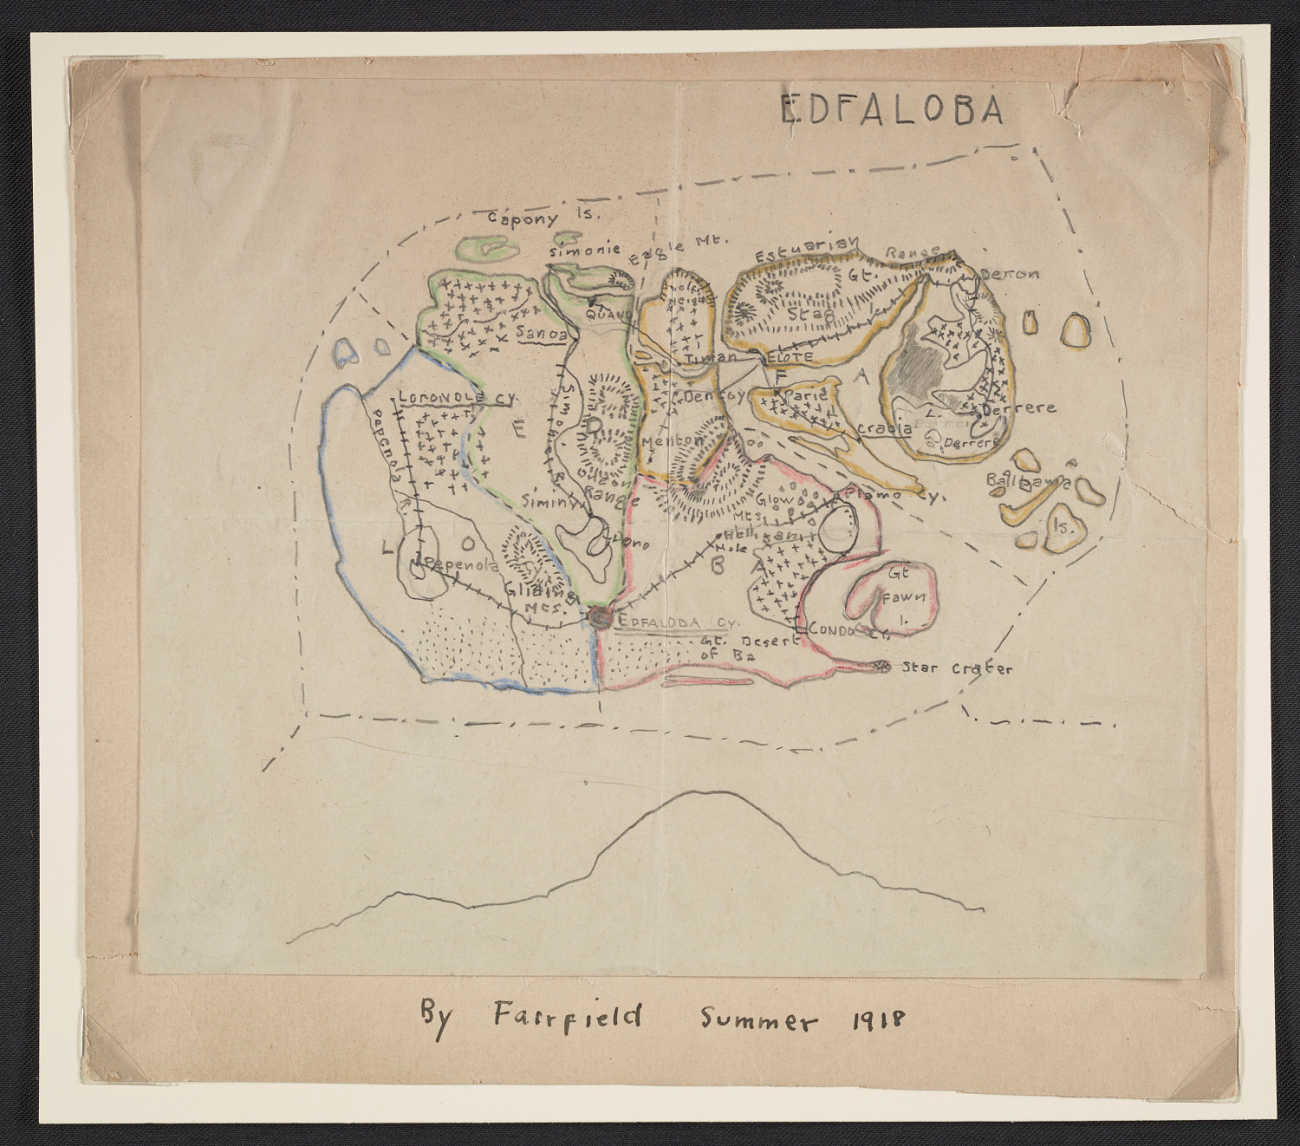 https://www.aaa.si.edu/collections/items/detail/fairfield-porter-map-edfaloba-16175